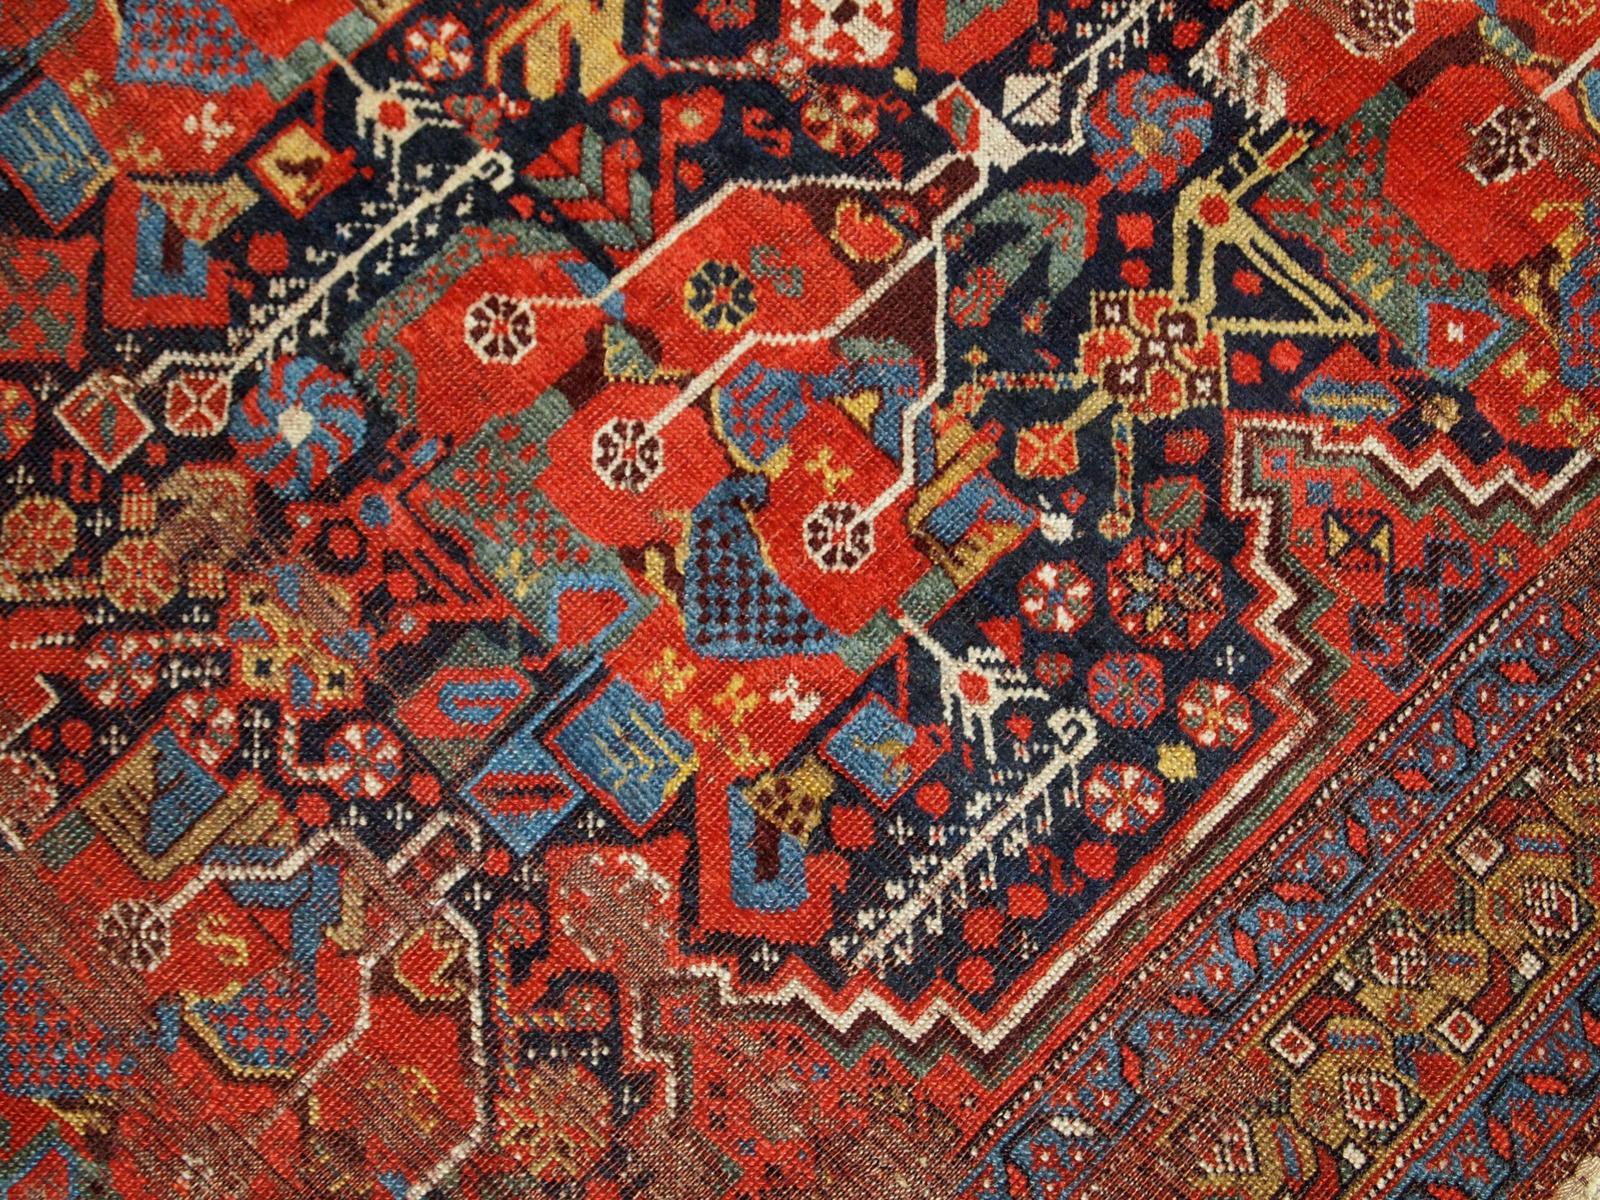 18th century rug